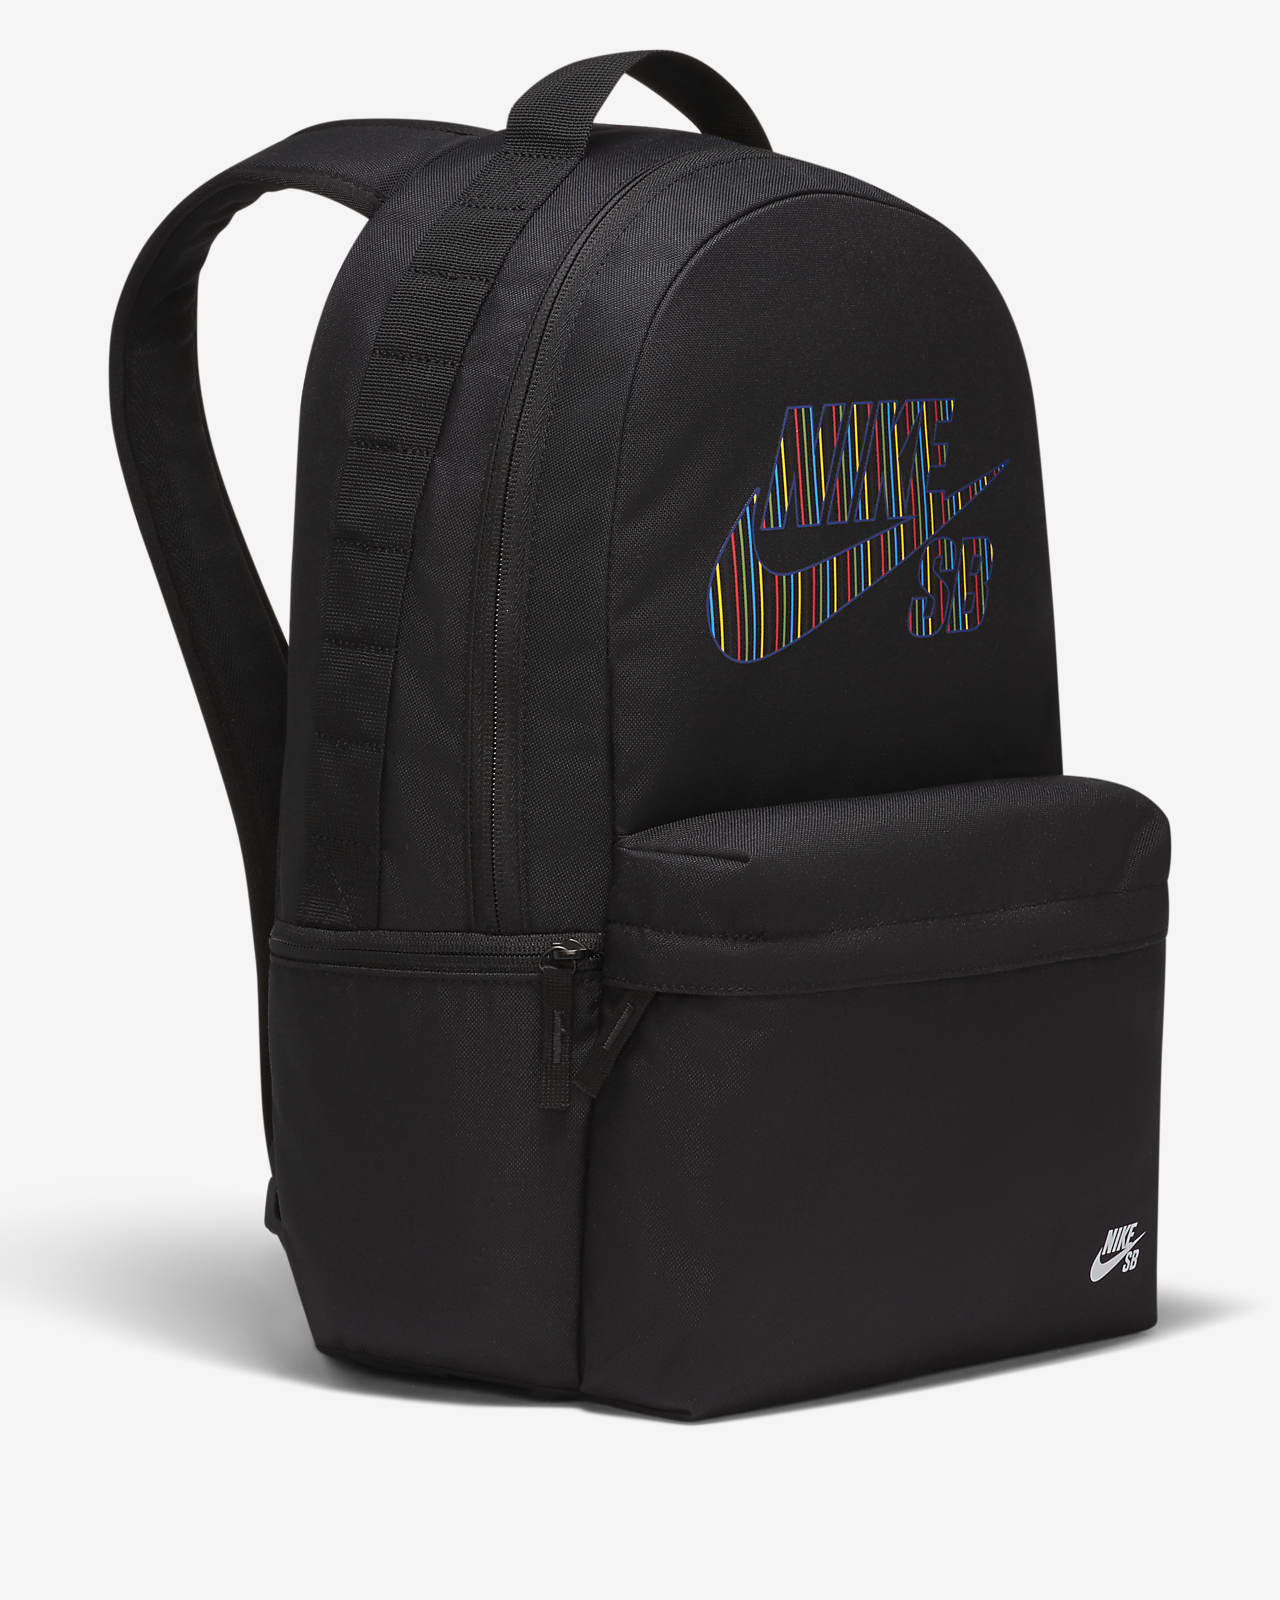 nike sb icon black backpack